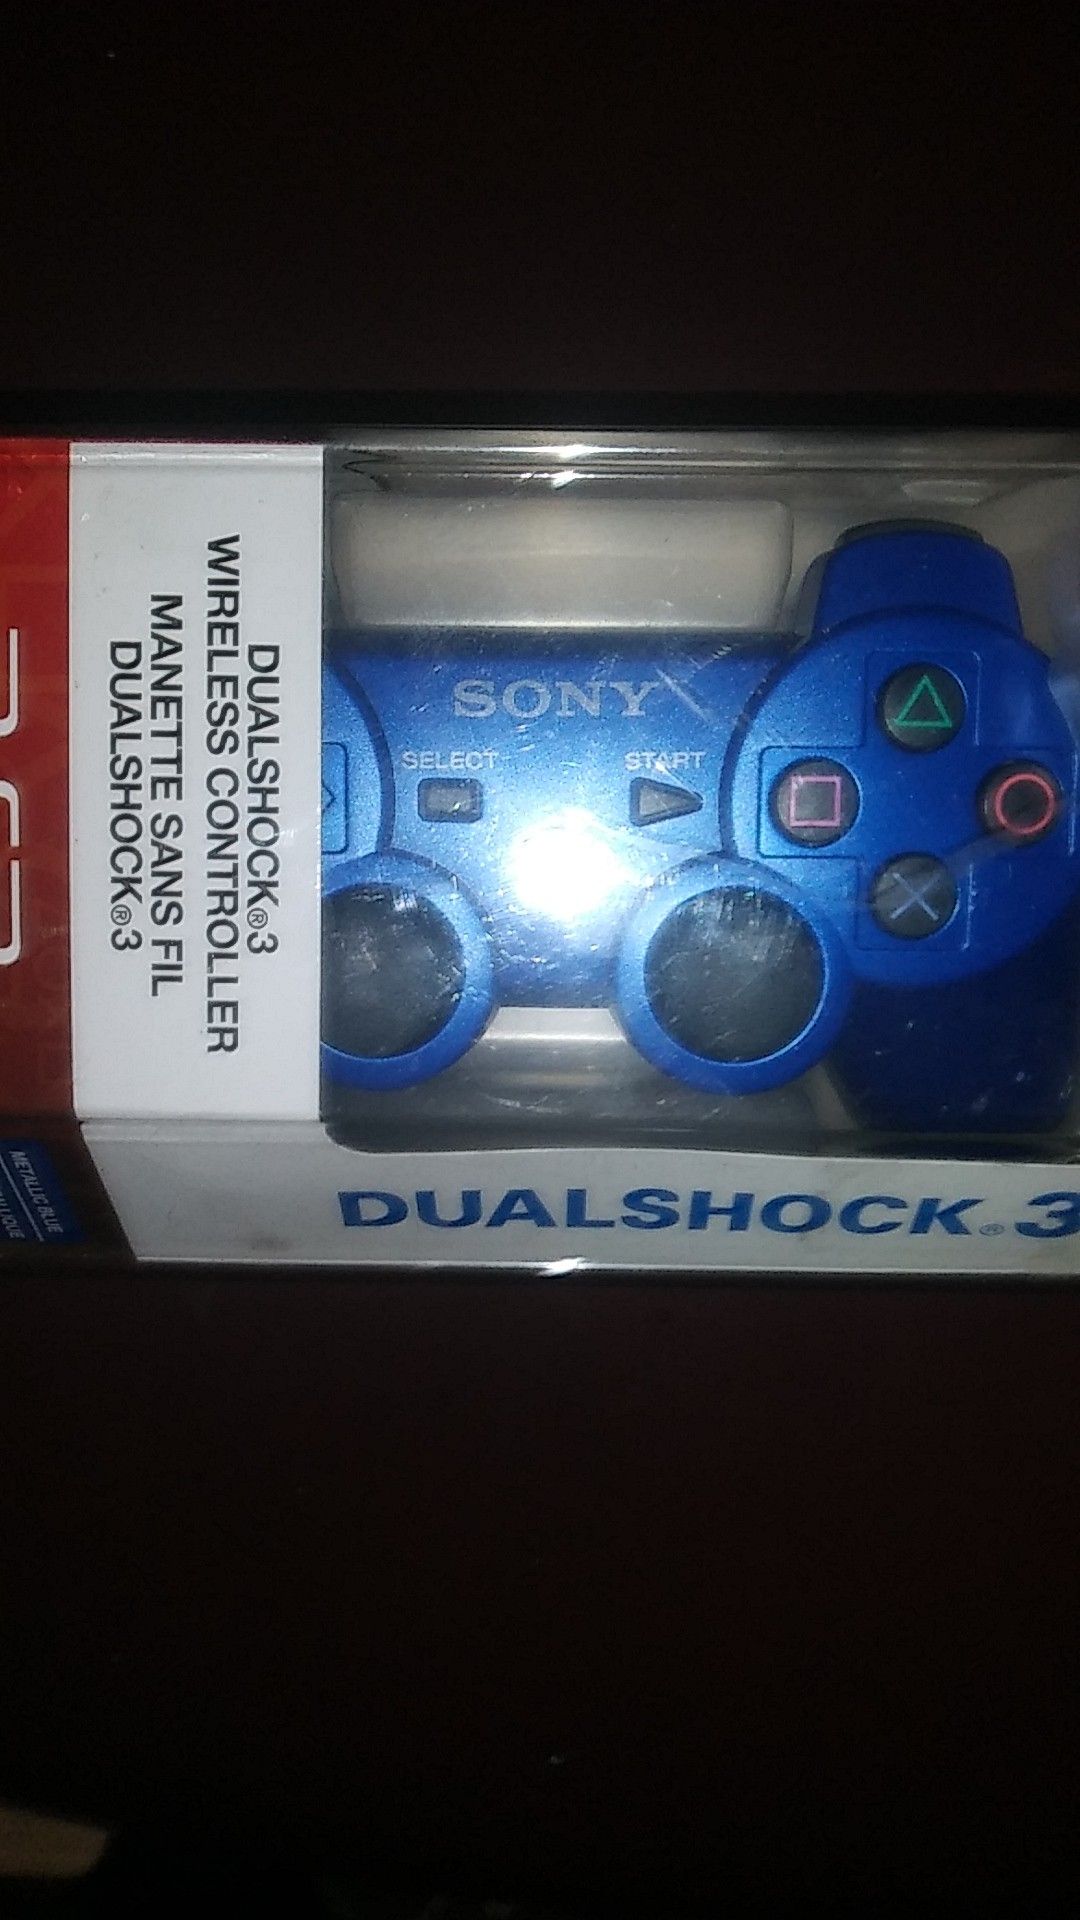 PlayStation 3 DualShock 3 controller